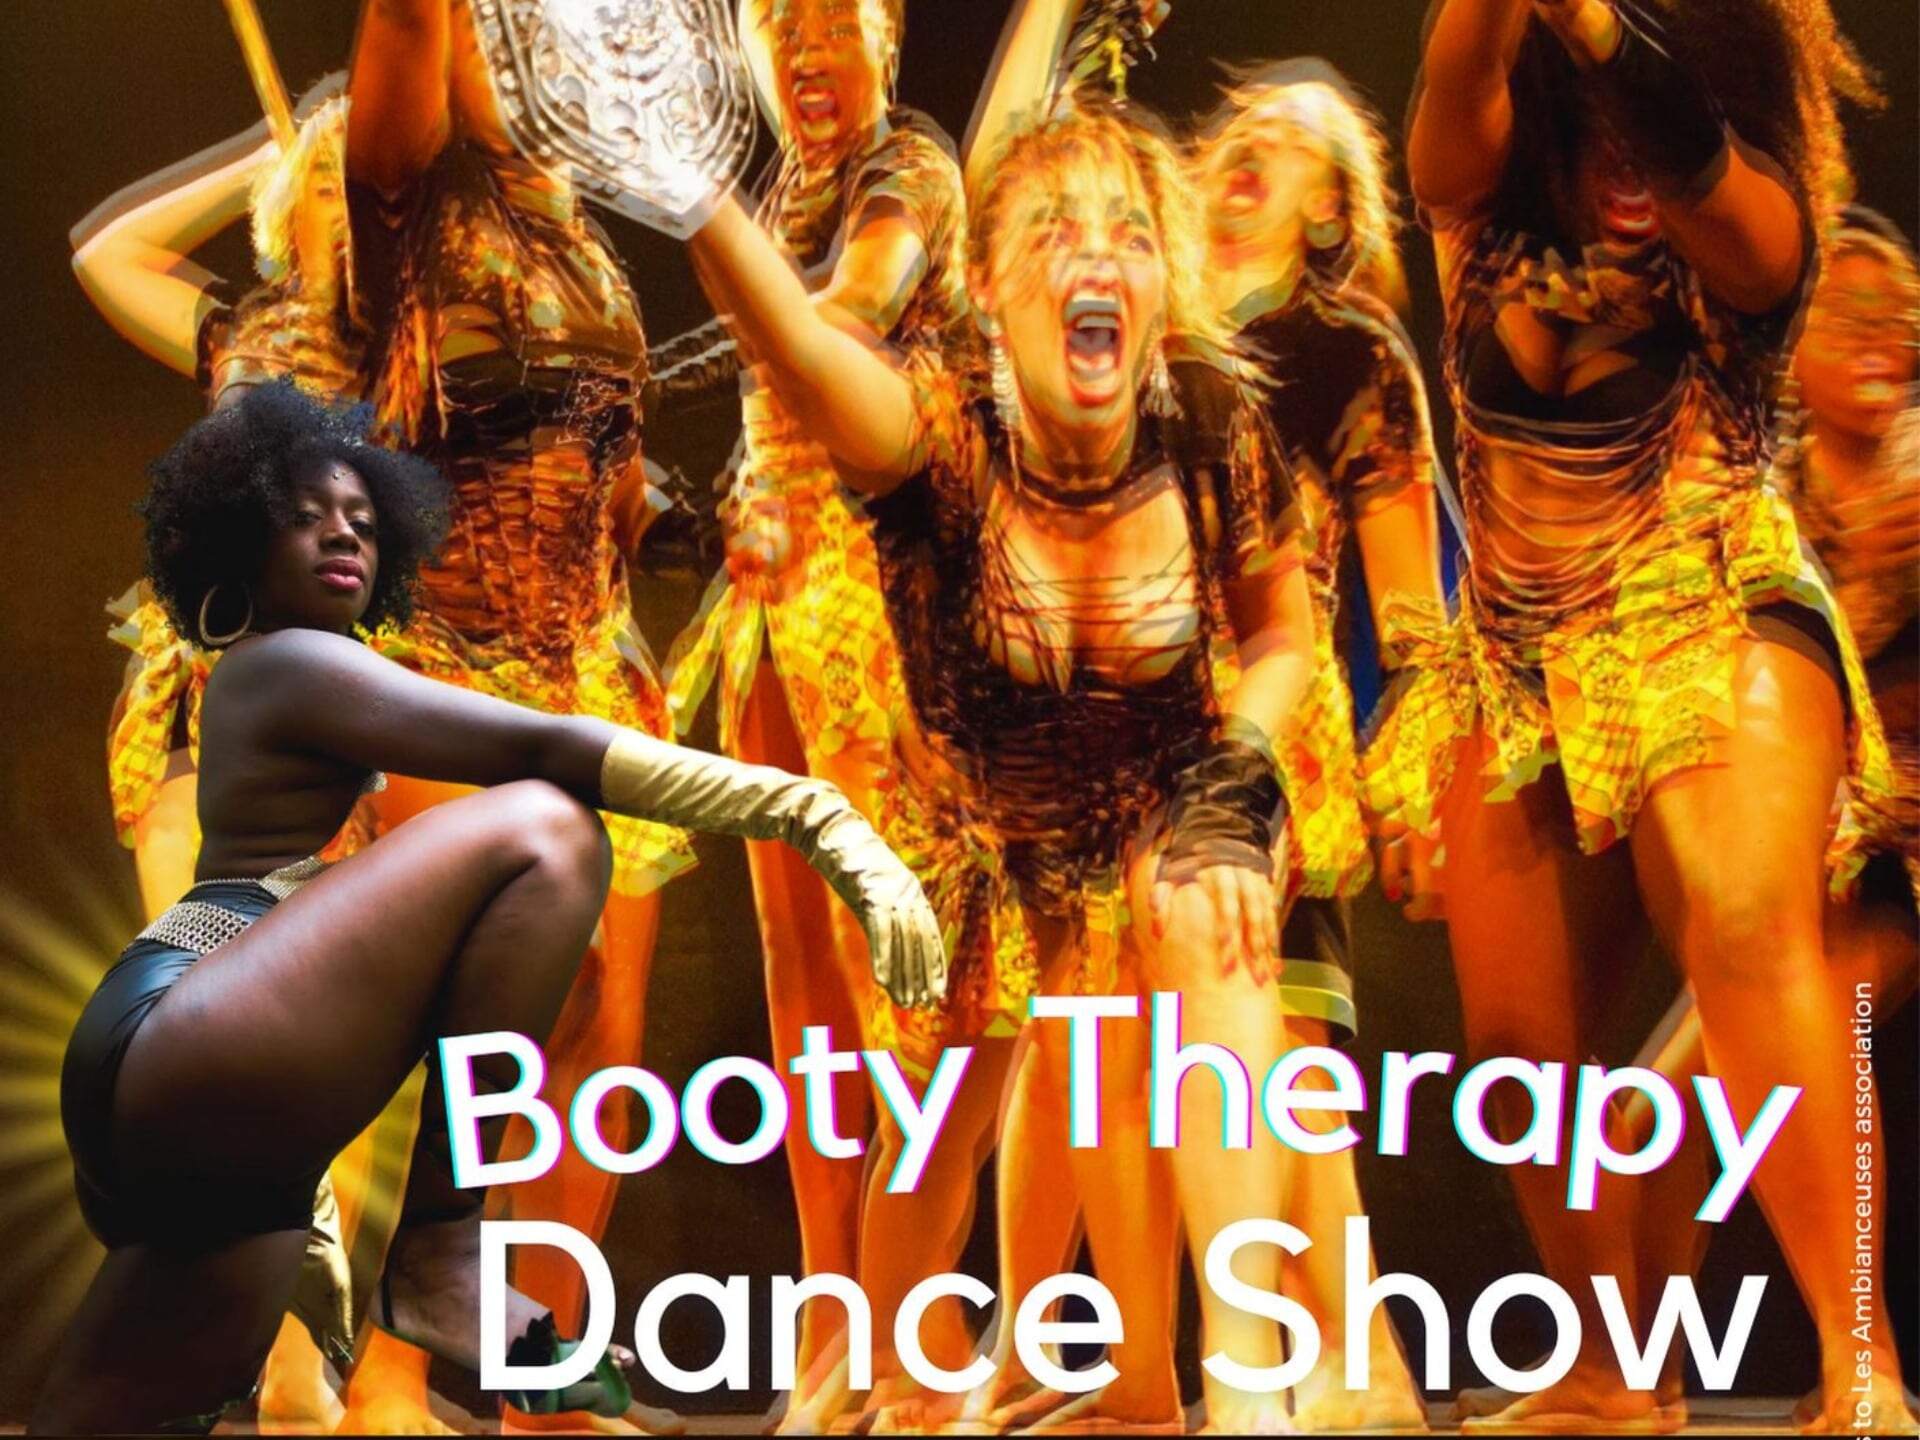 Spectacle de danse Booty Therapy avec Bootykilleuses et invités